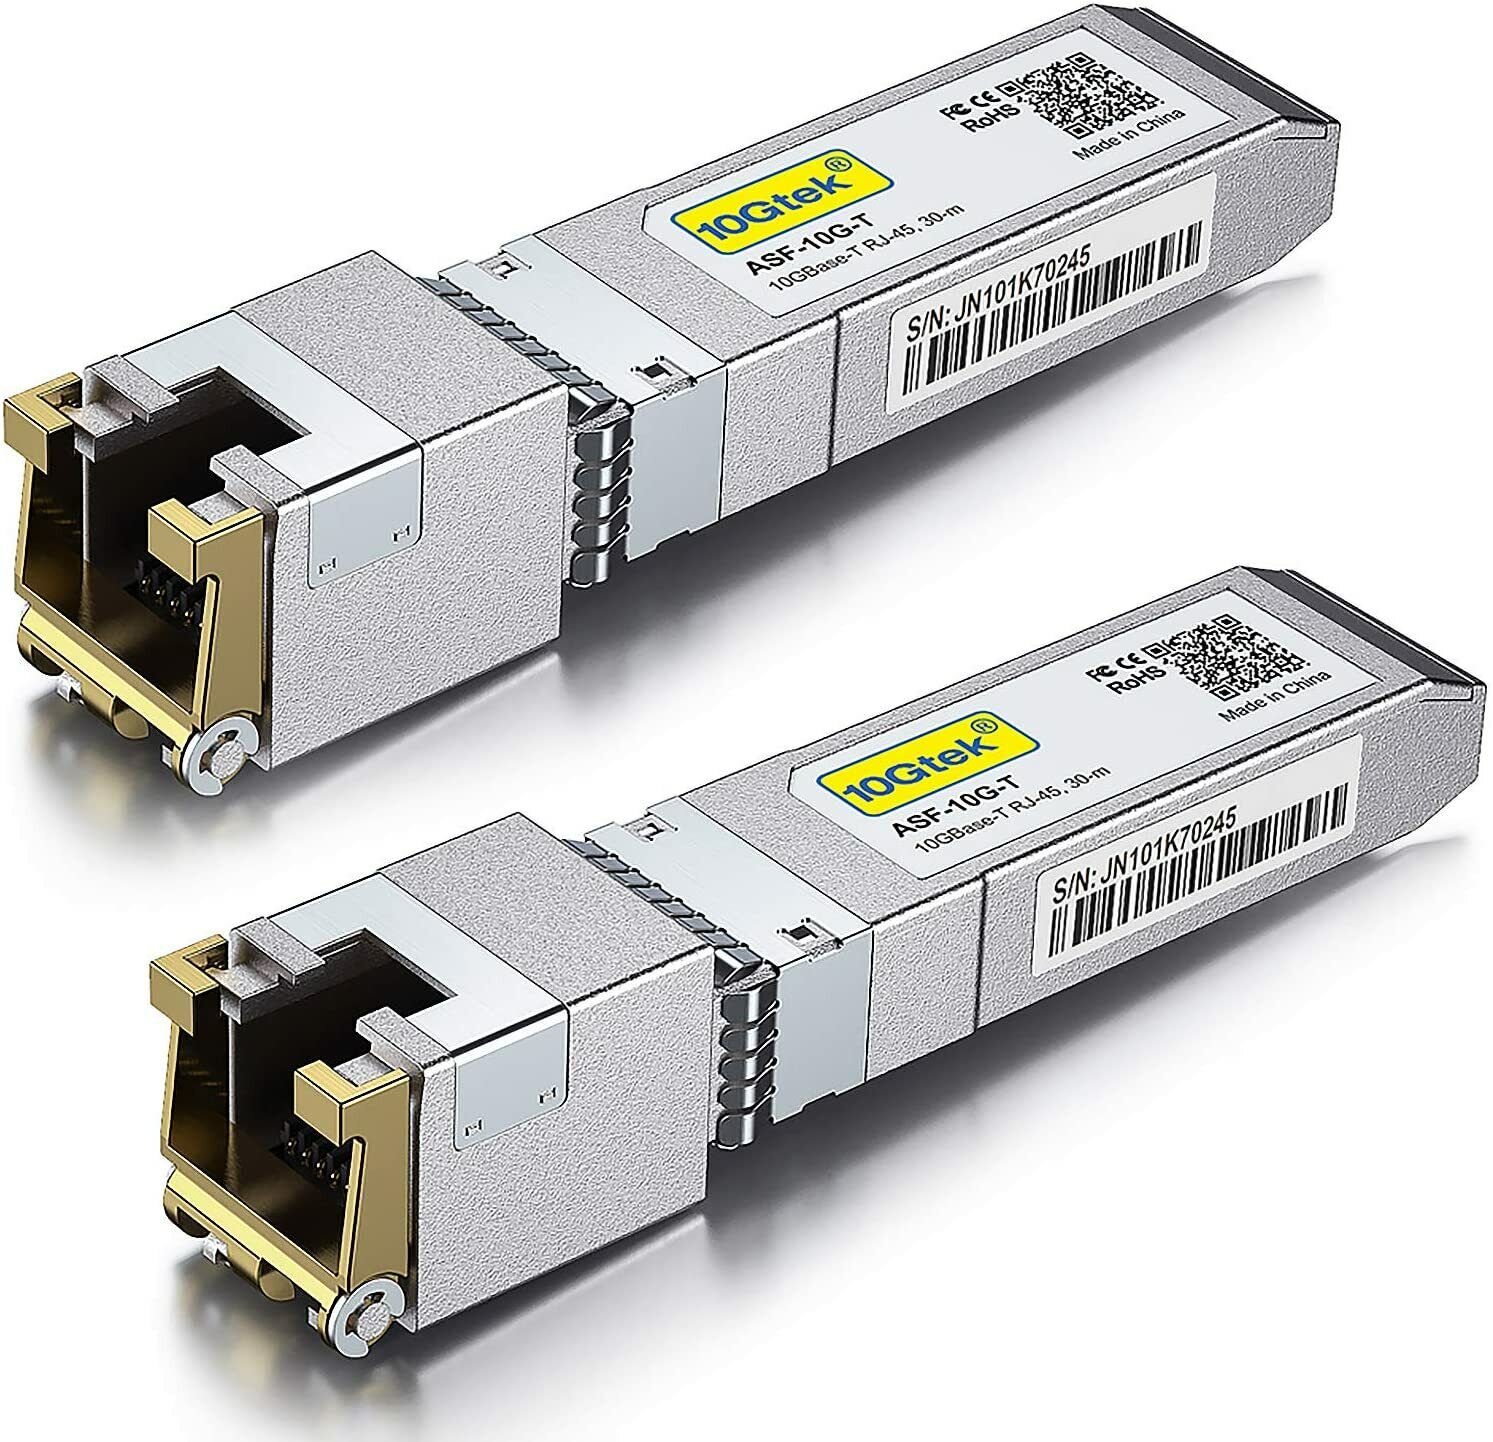 2 Packs For Cisco SFP-10G-T Transceiver 10G SFP to RJ45 10GBase-T Copper Module